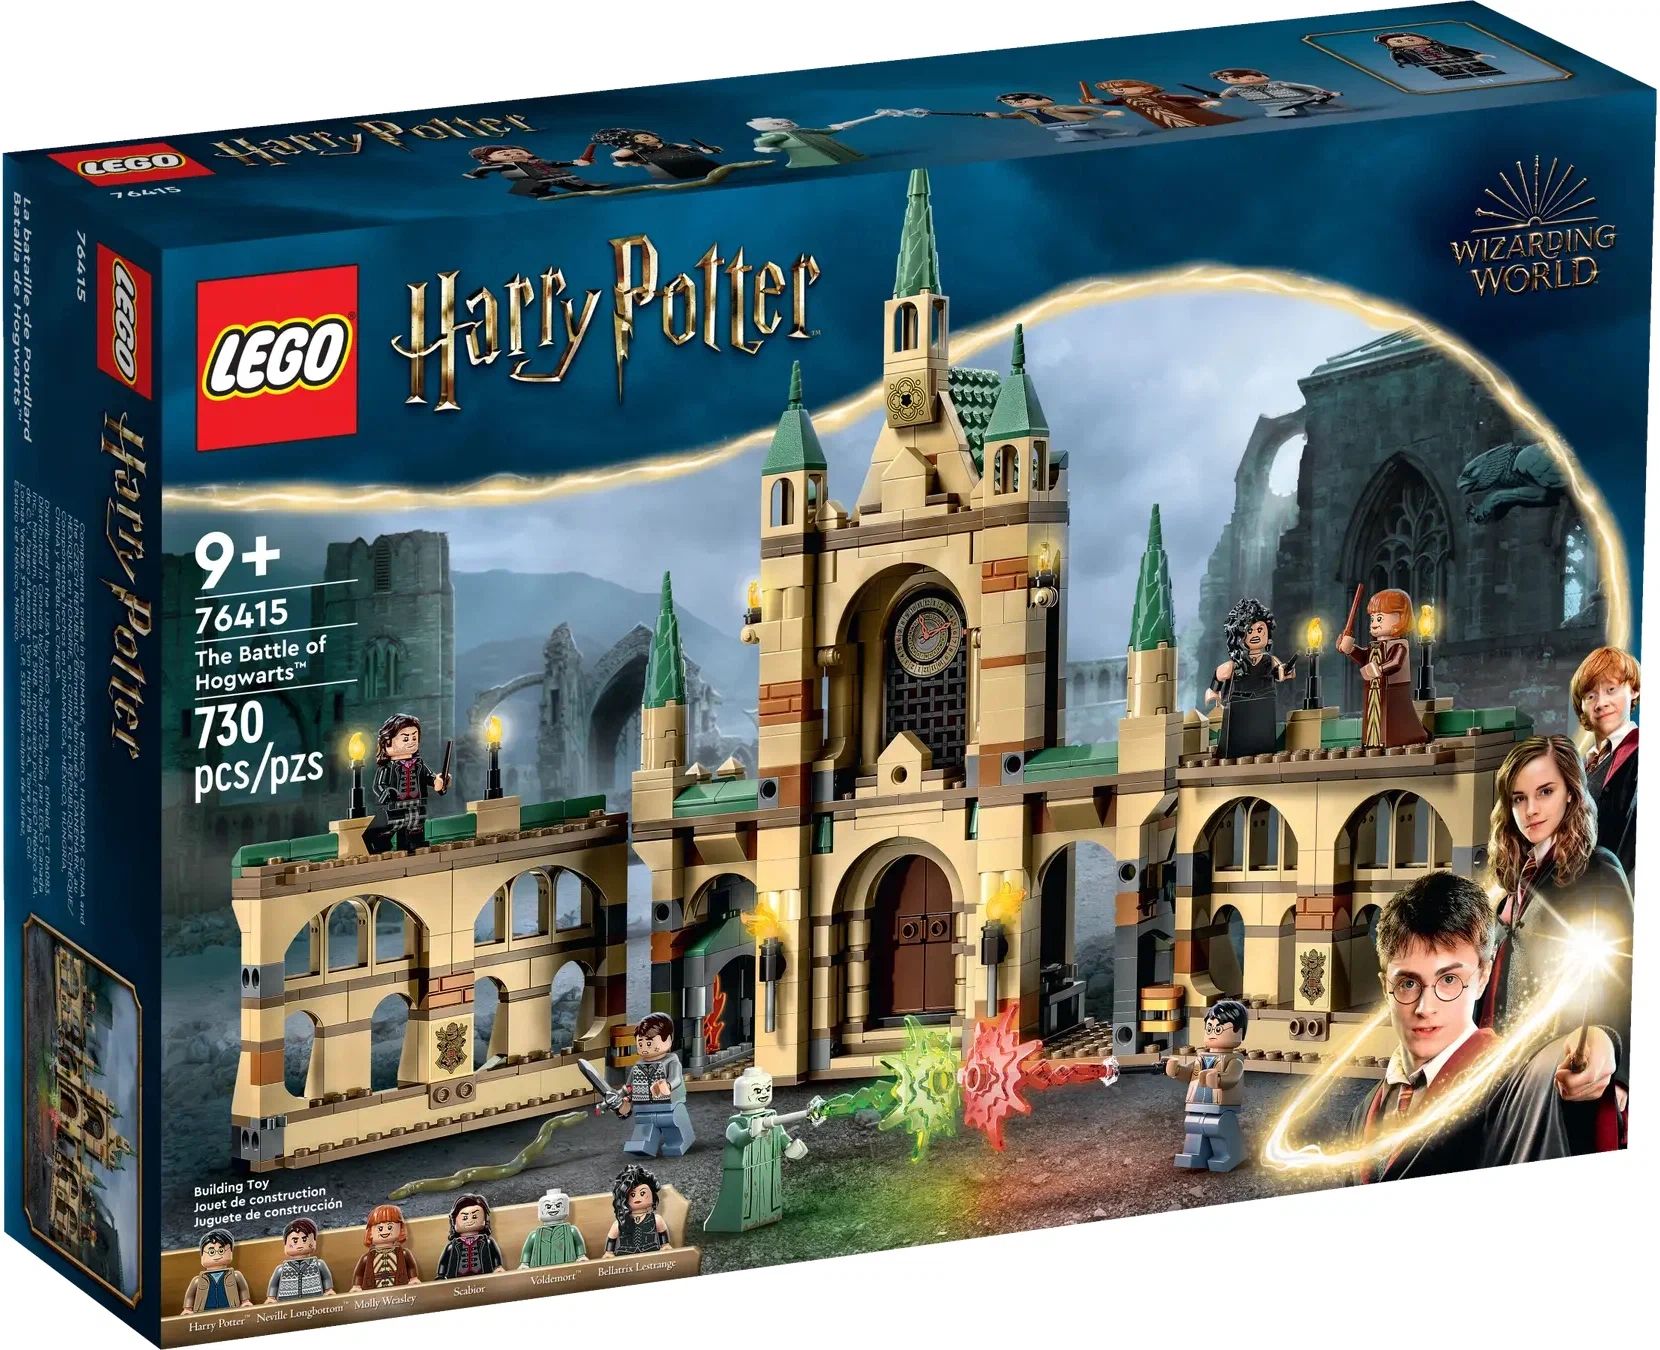 Конструктор LEGO Harry Potter Битва за Хогвартс, 730 деталей, 9+, 76415 конструктор lego harry potter учёба в хогвартсе урок заклинаний 76385